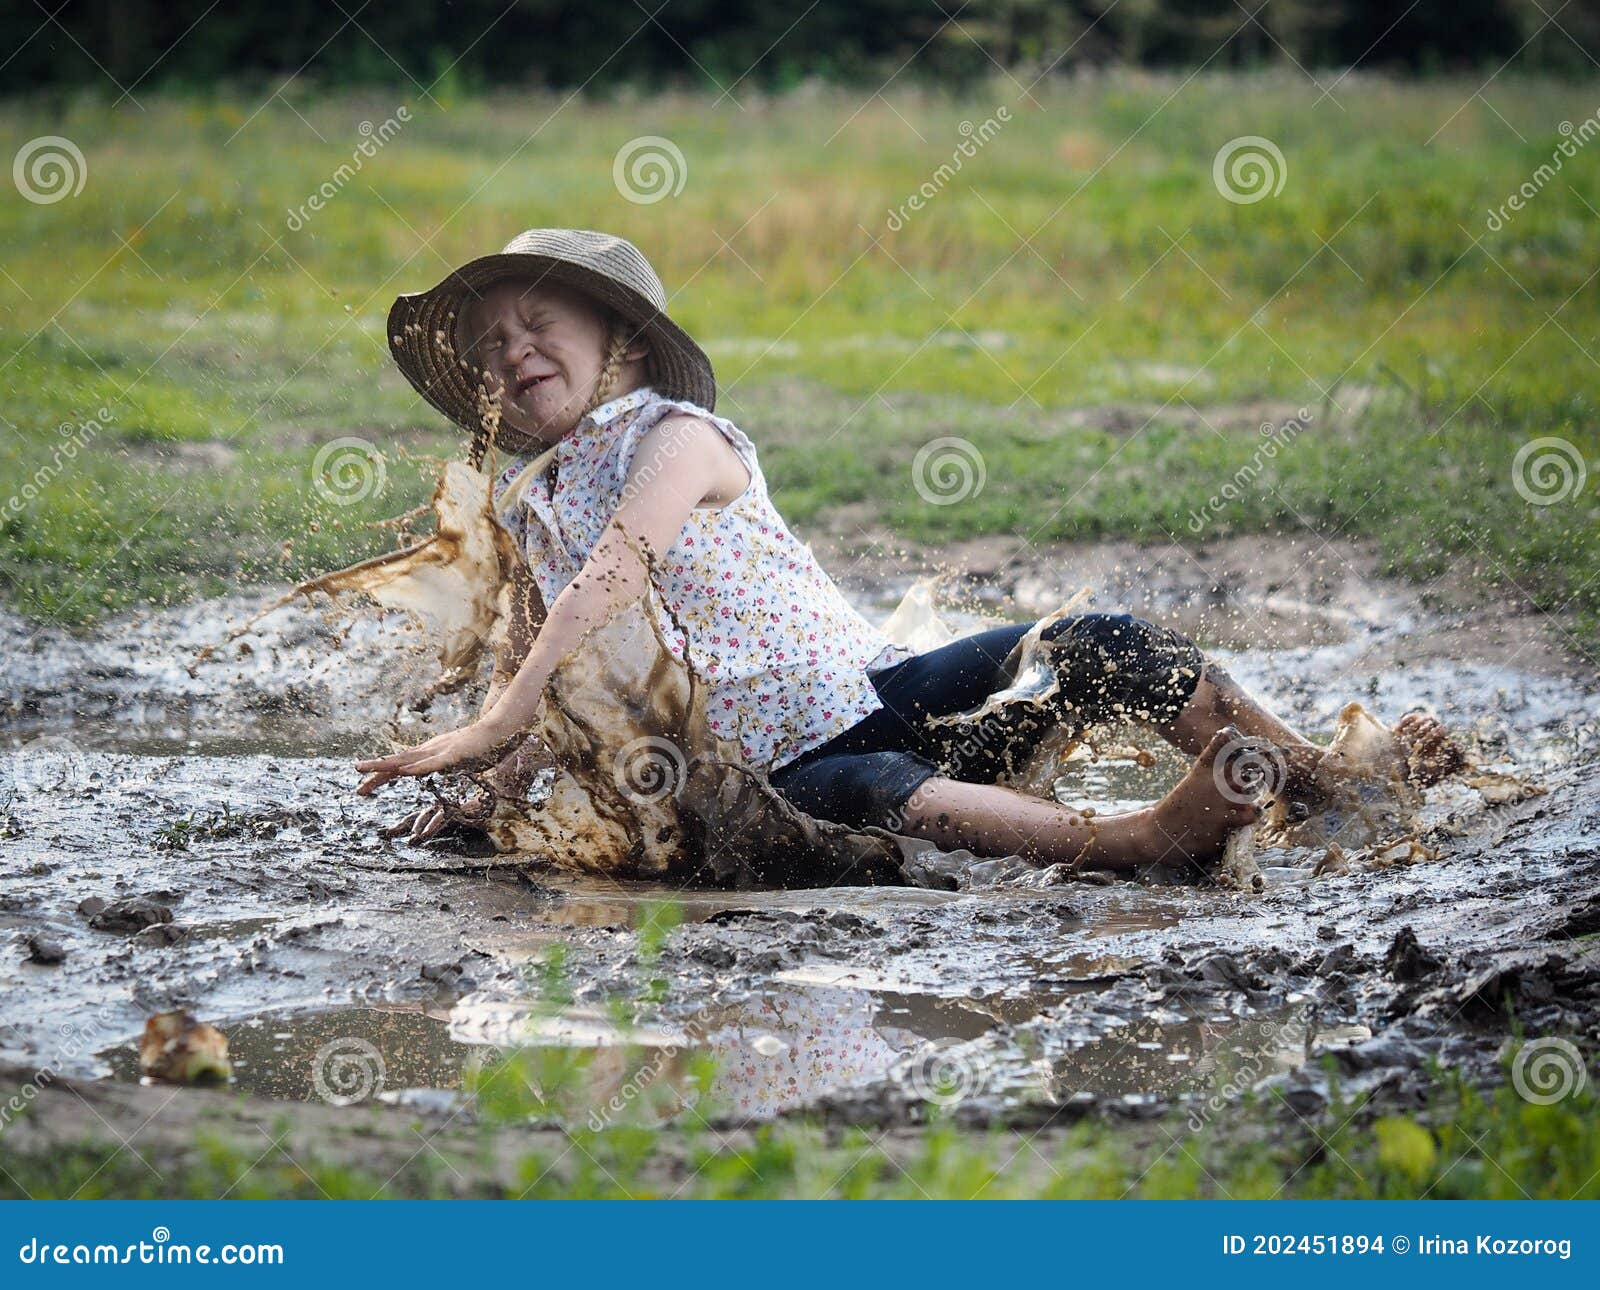 aiza ashraf recommends girl falls in mud pic